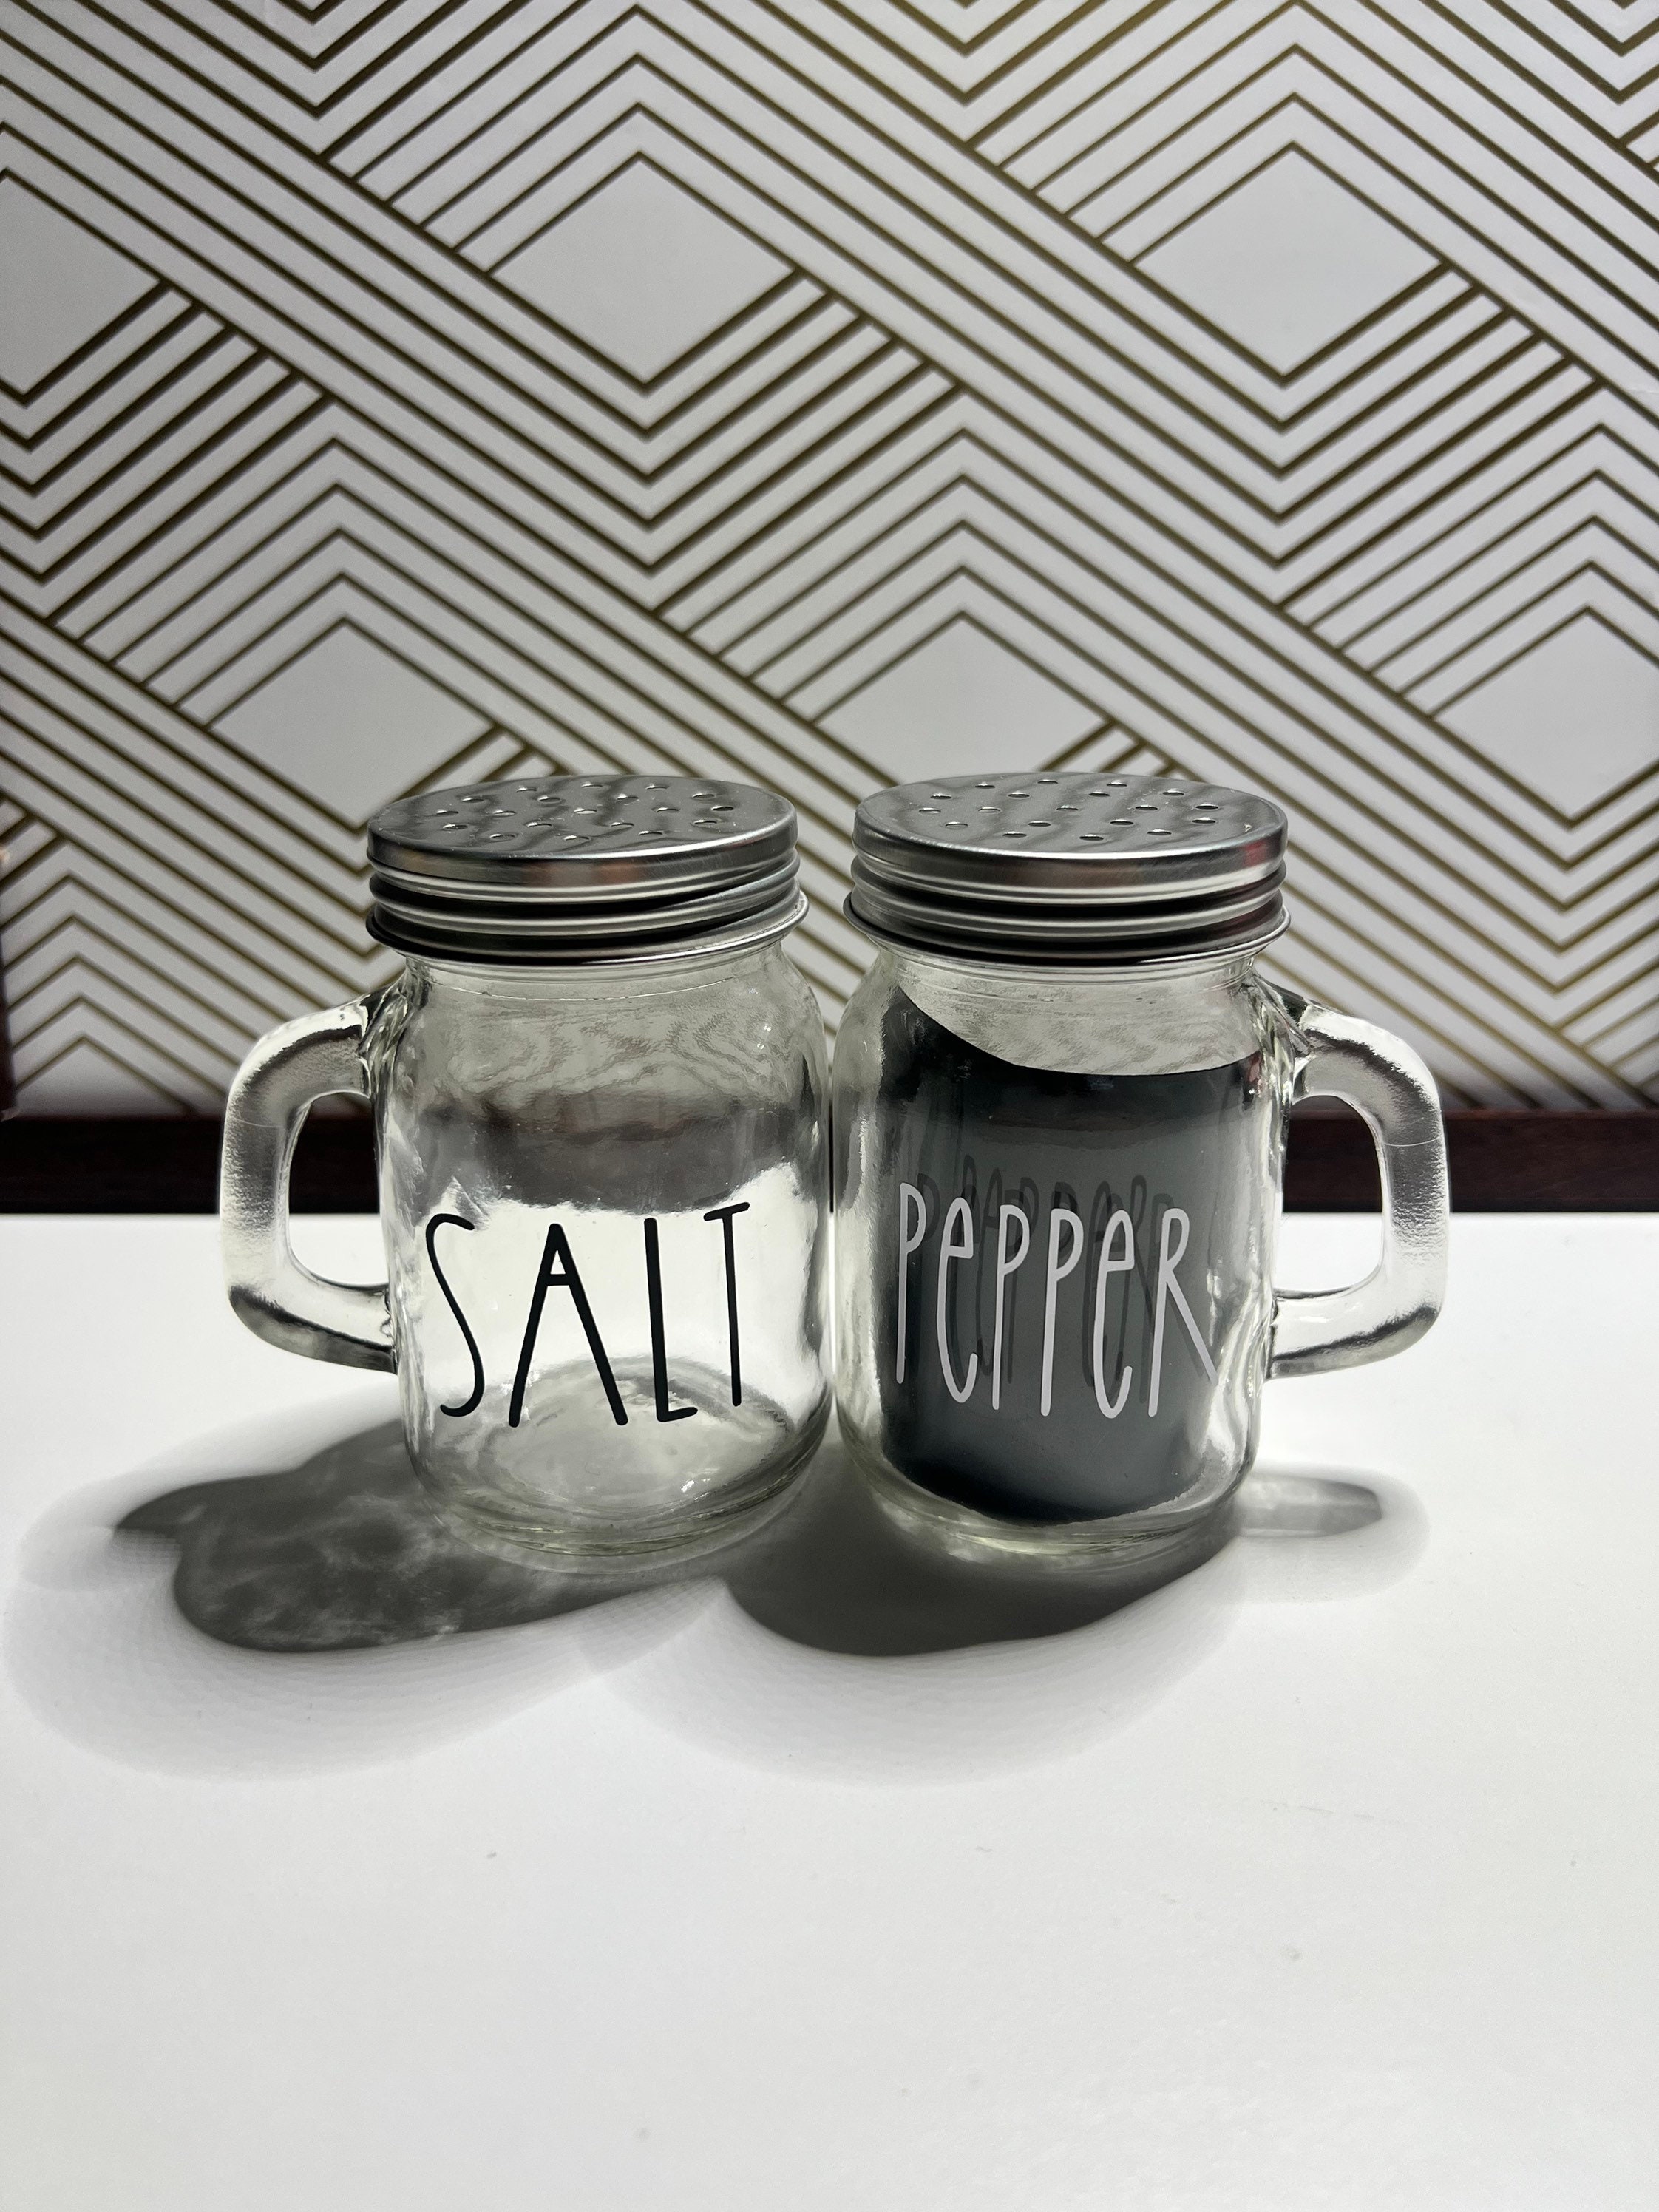 Barnyard Designs Salt and Pepper Shaker Set, Ceramic, Novelty Farmhouse Salt and Pepper Holders, Vintage Kitchen and Table Decor, Taupe, 2” x 3.25”